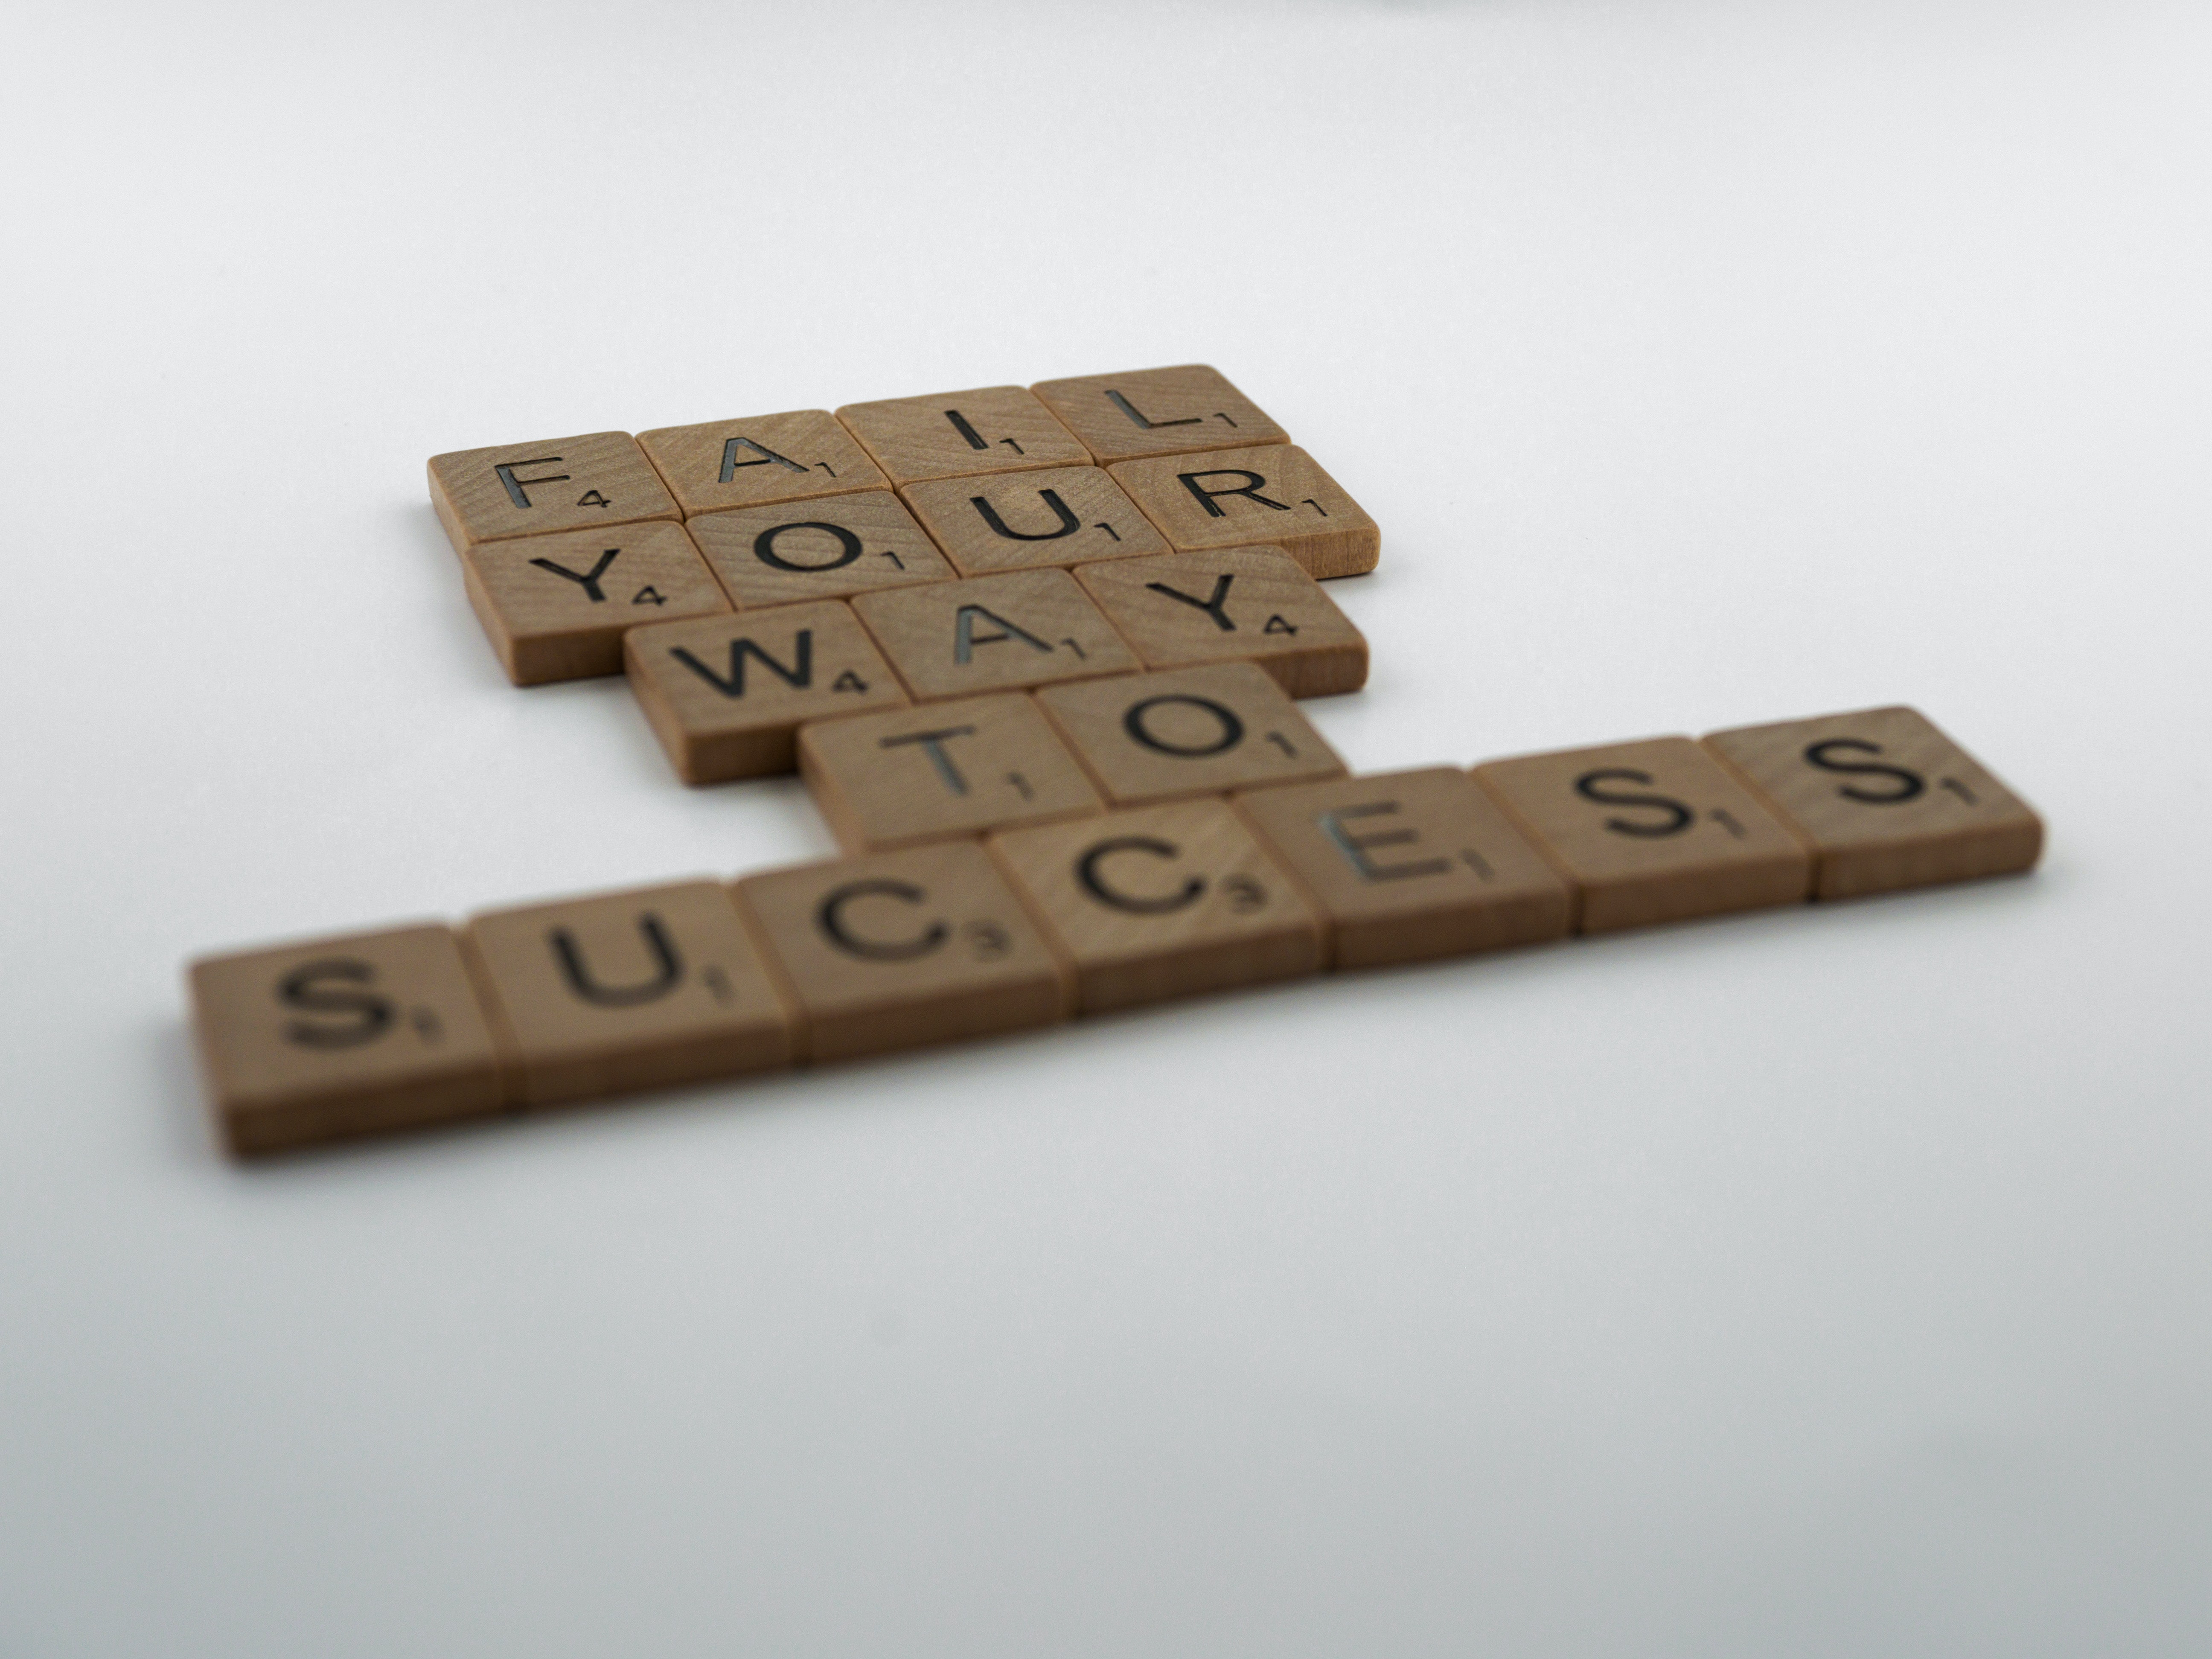 "Fail your way to success"